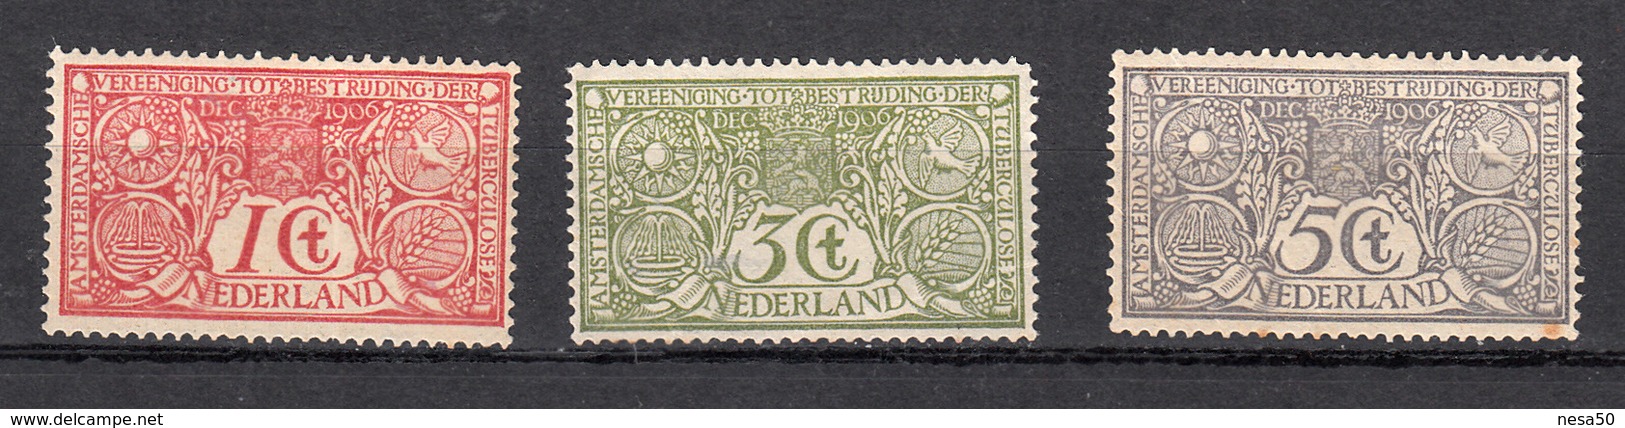 Nederland 1906 Nvph Nr 84 - 86, Mi Nr 69 - 71, Tuberculose Zegels, Niet Geheel Postfris, Derde Zegel Achterkant Vlekje - Neufs